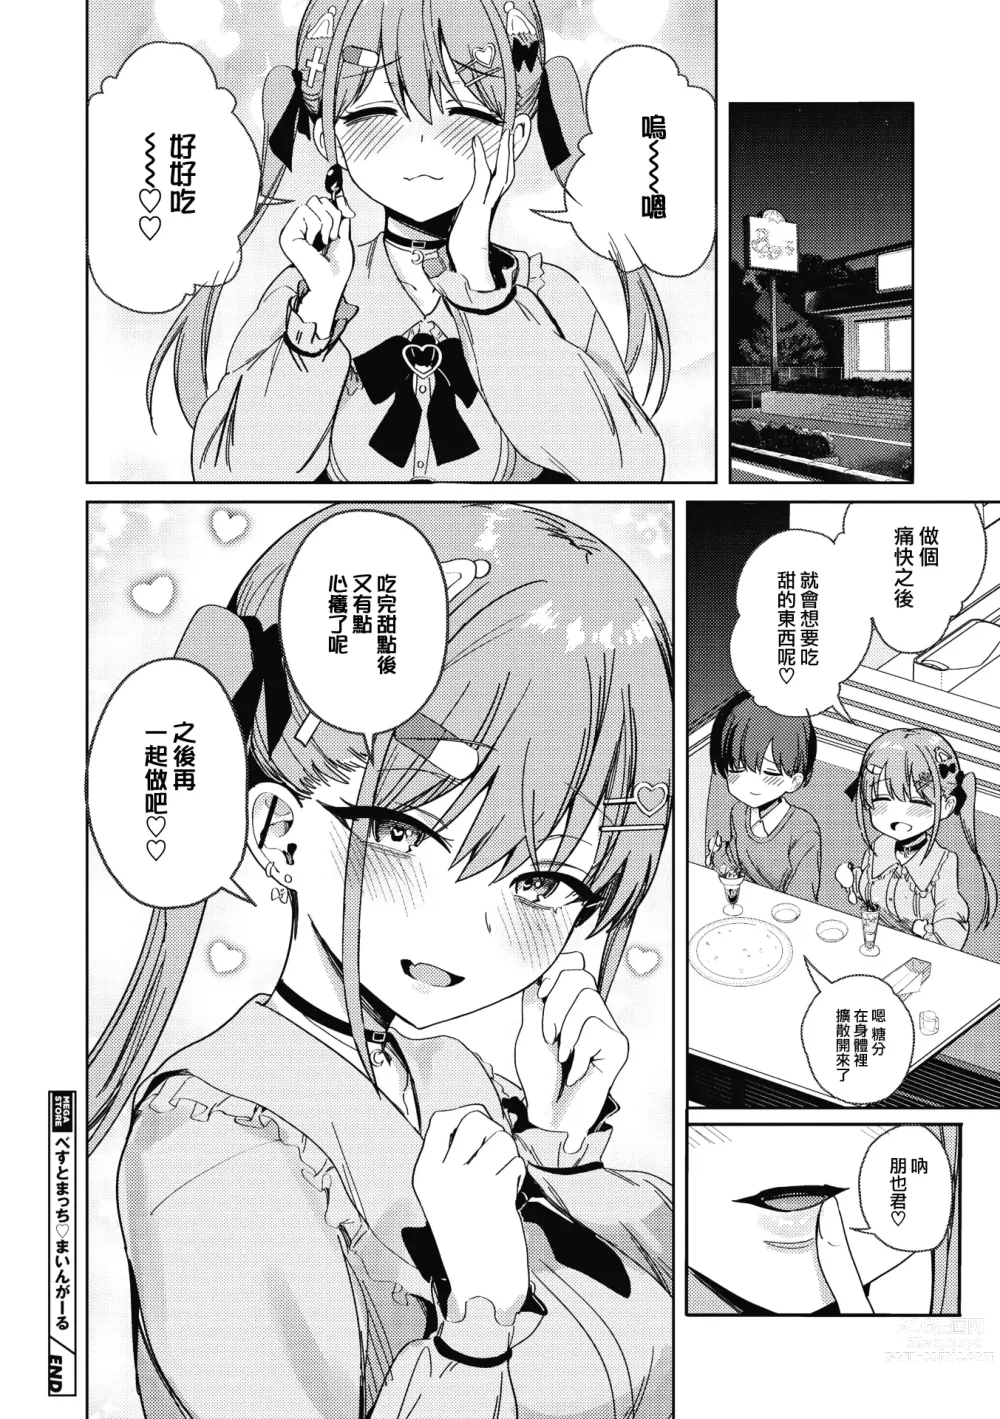 Page 29 of manga Best Match Mine Girl